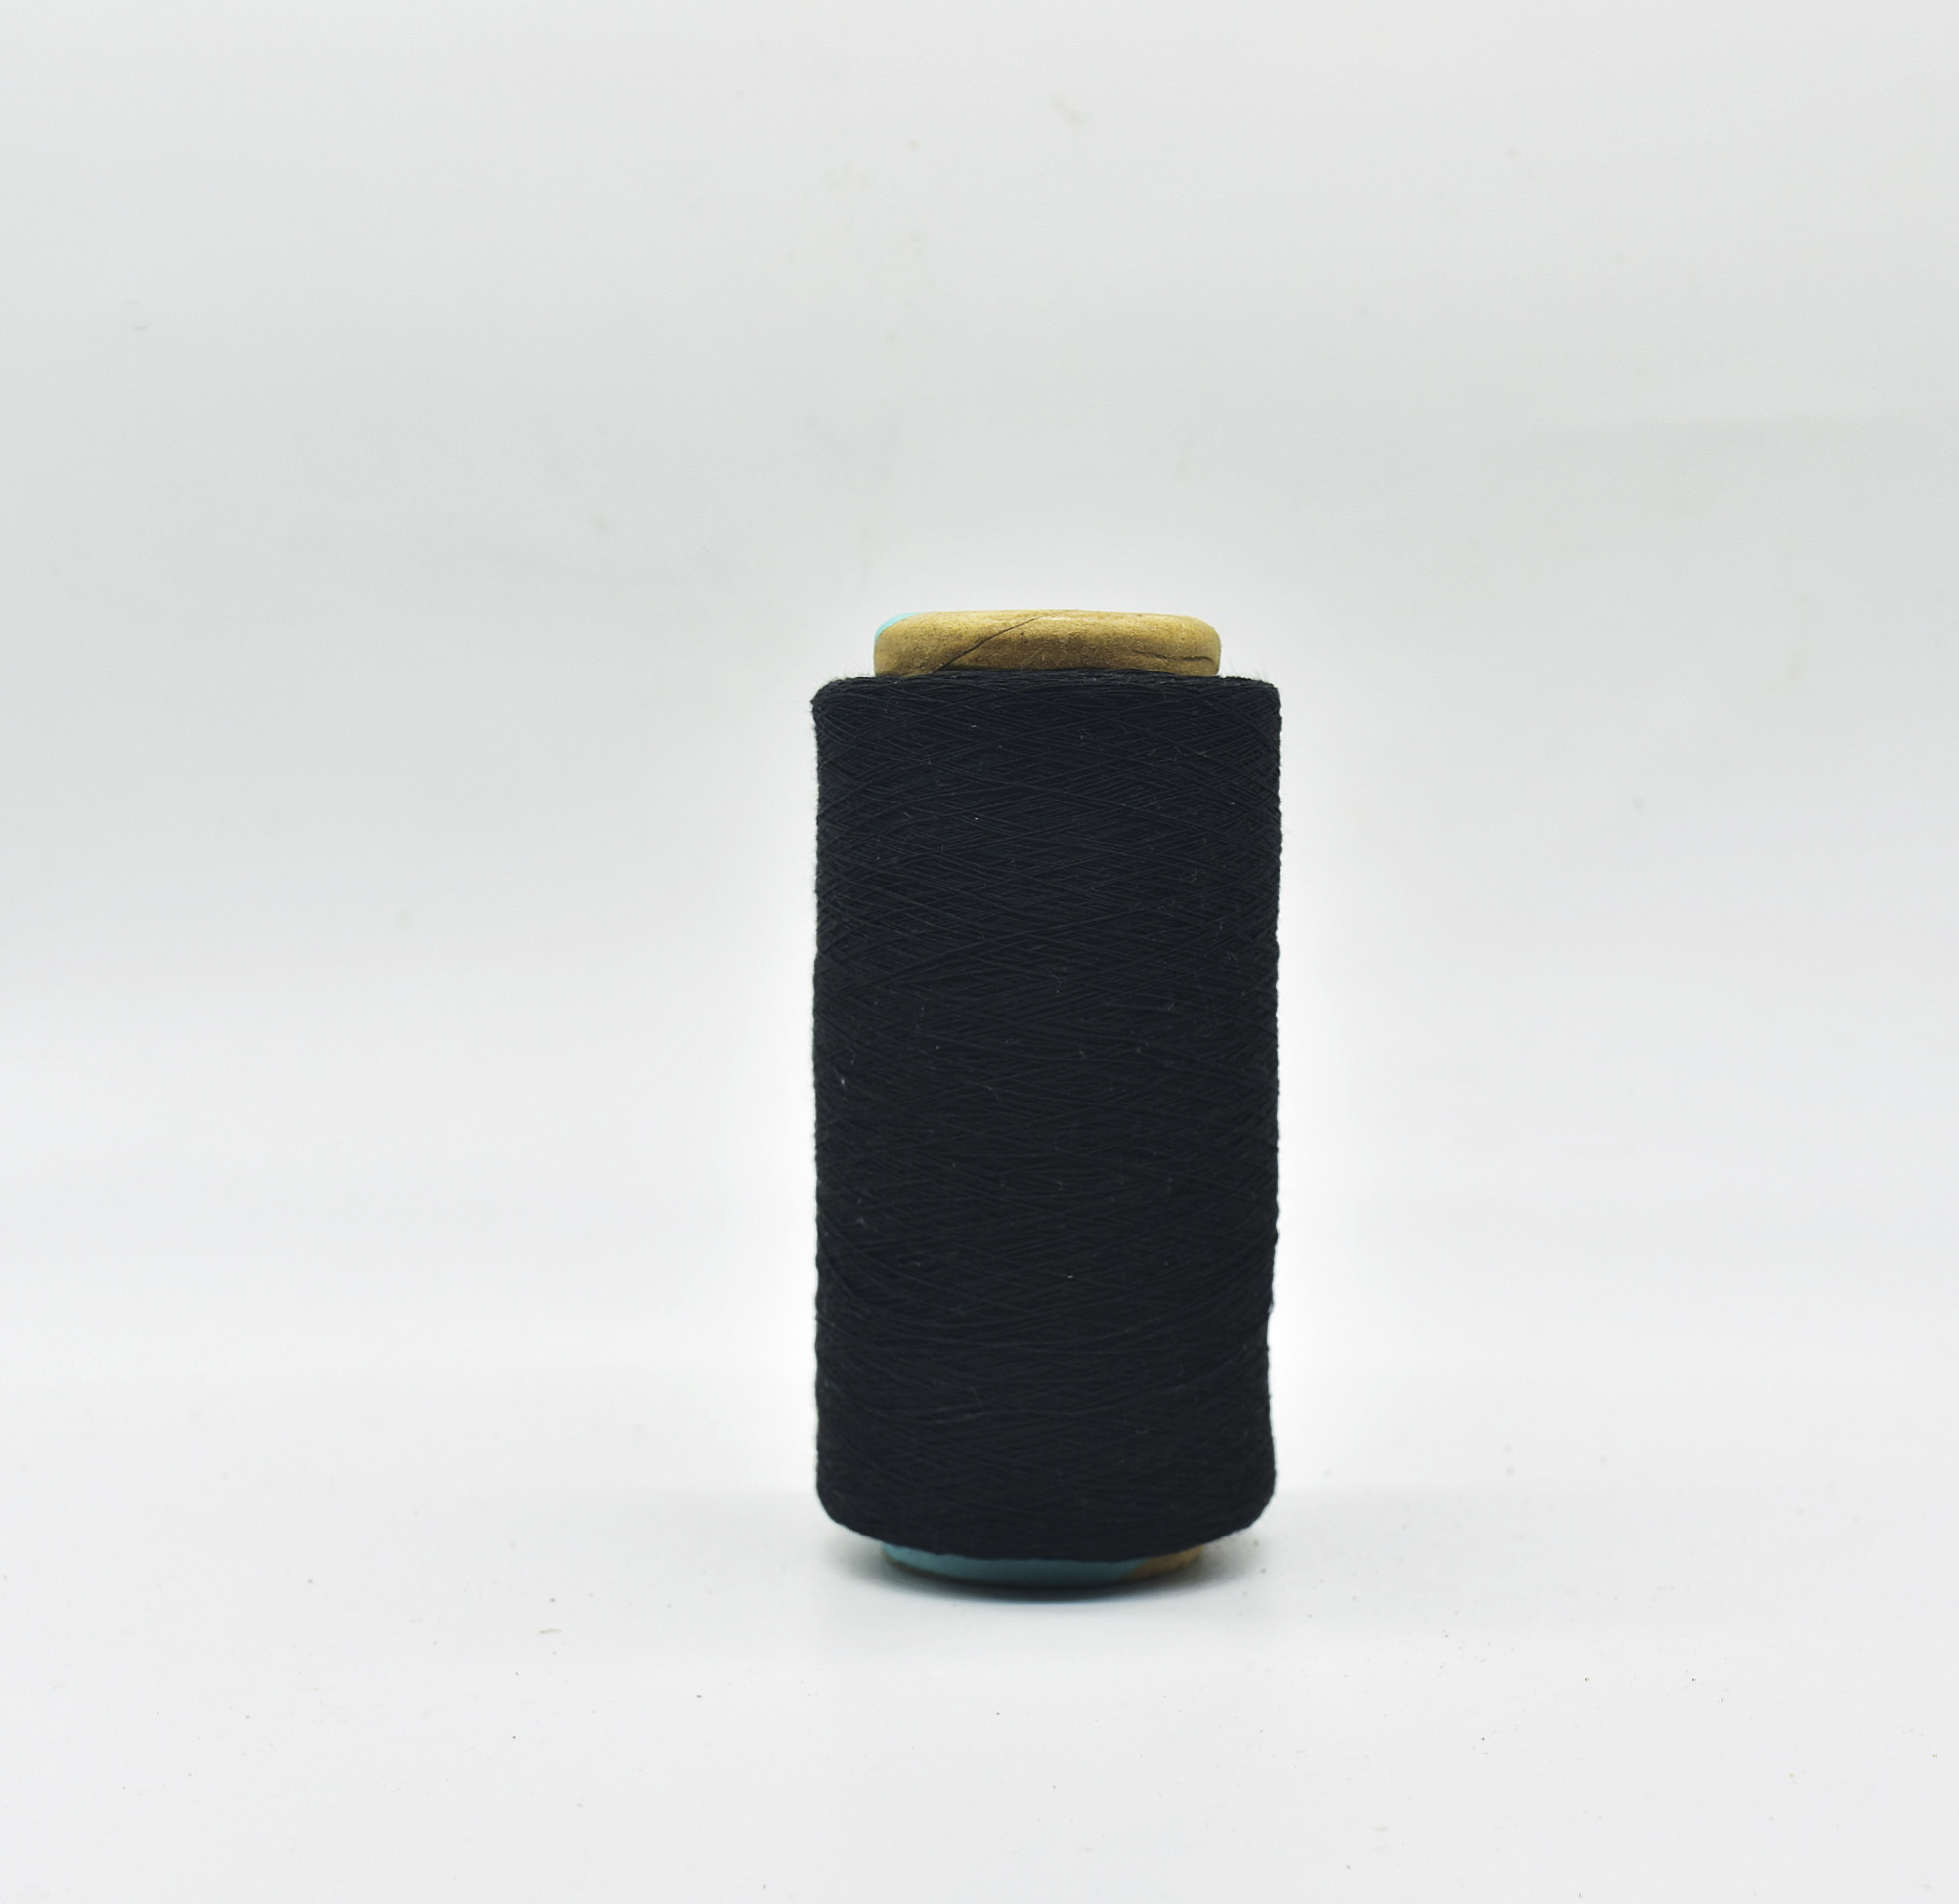 NE 12S Black colors recycled cotton yarn for knitting socks 